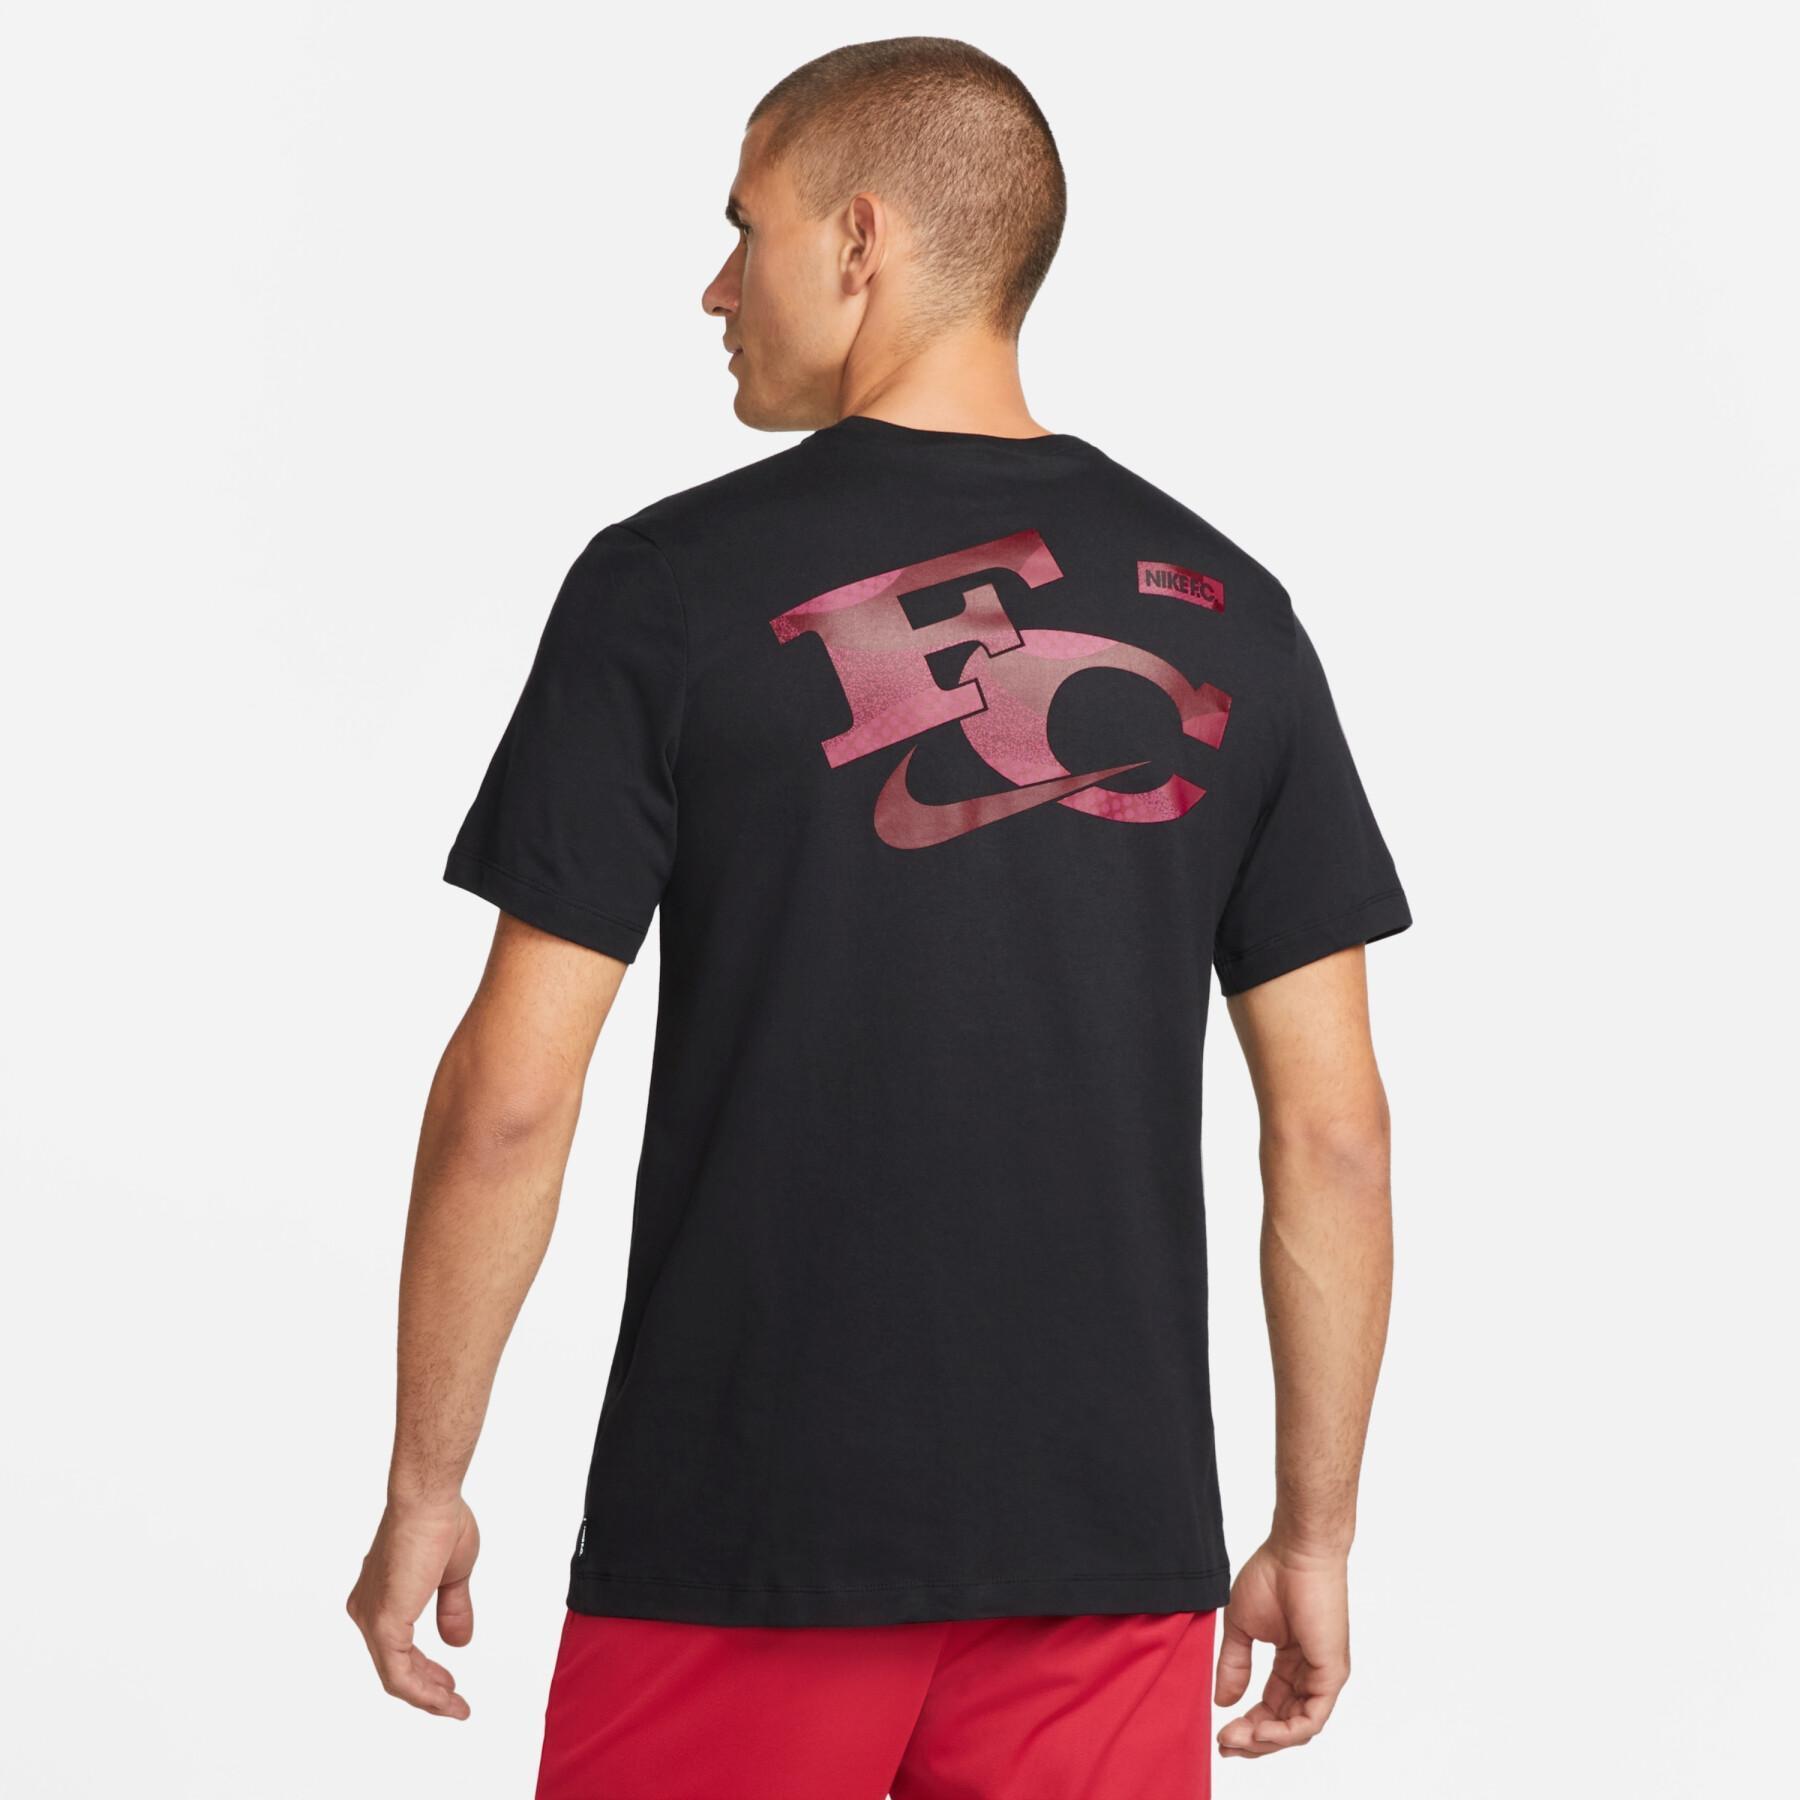 T-shirt Nike F.C.